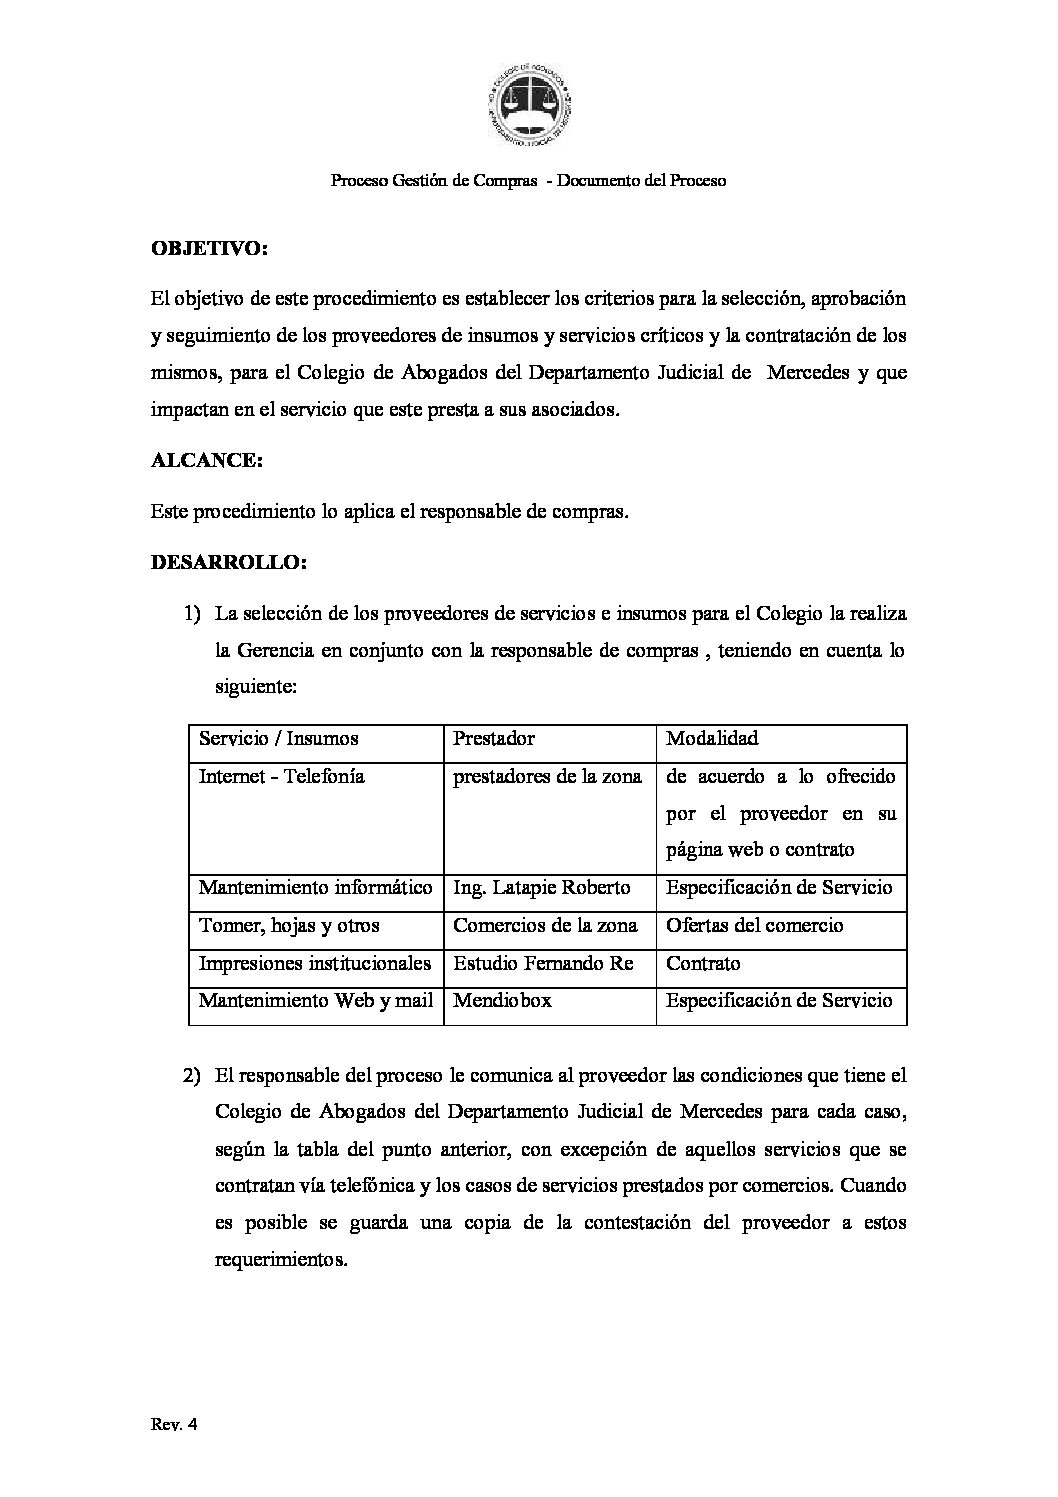 ISO9001-GC-Documento del Proceso - REV 4